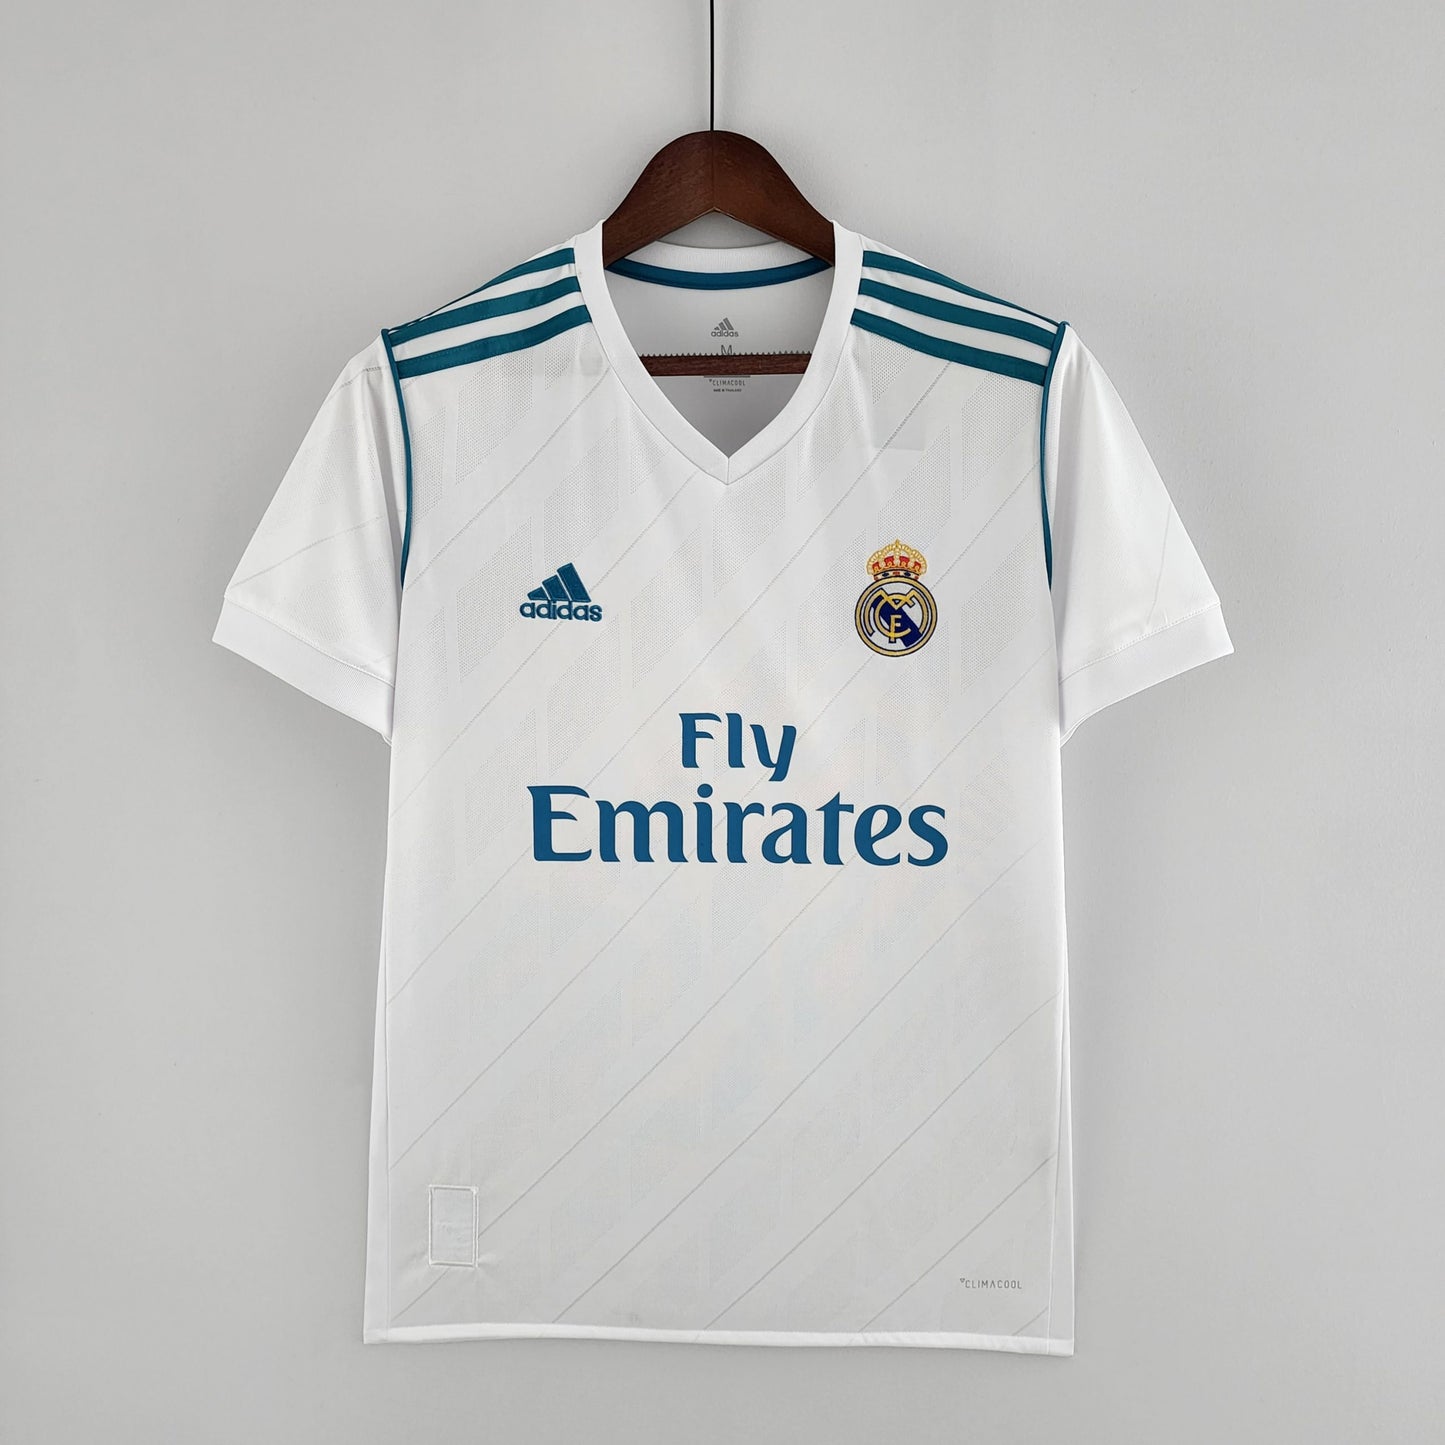 Real Madrid 17/18 Home Kit 1:1 Replica